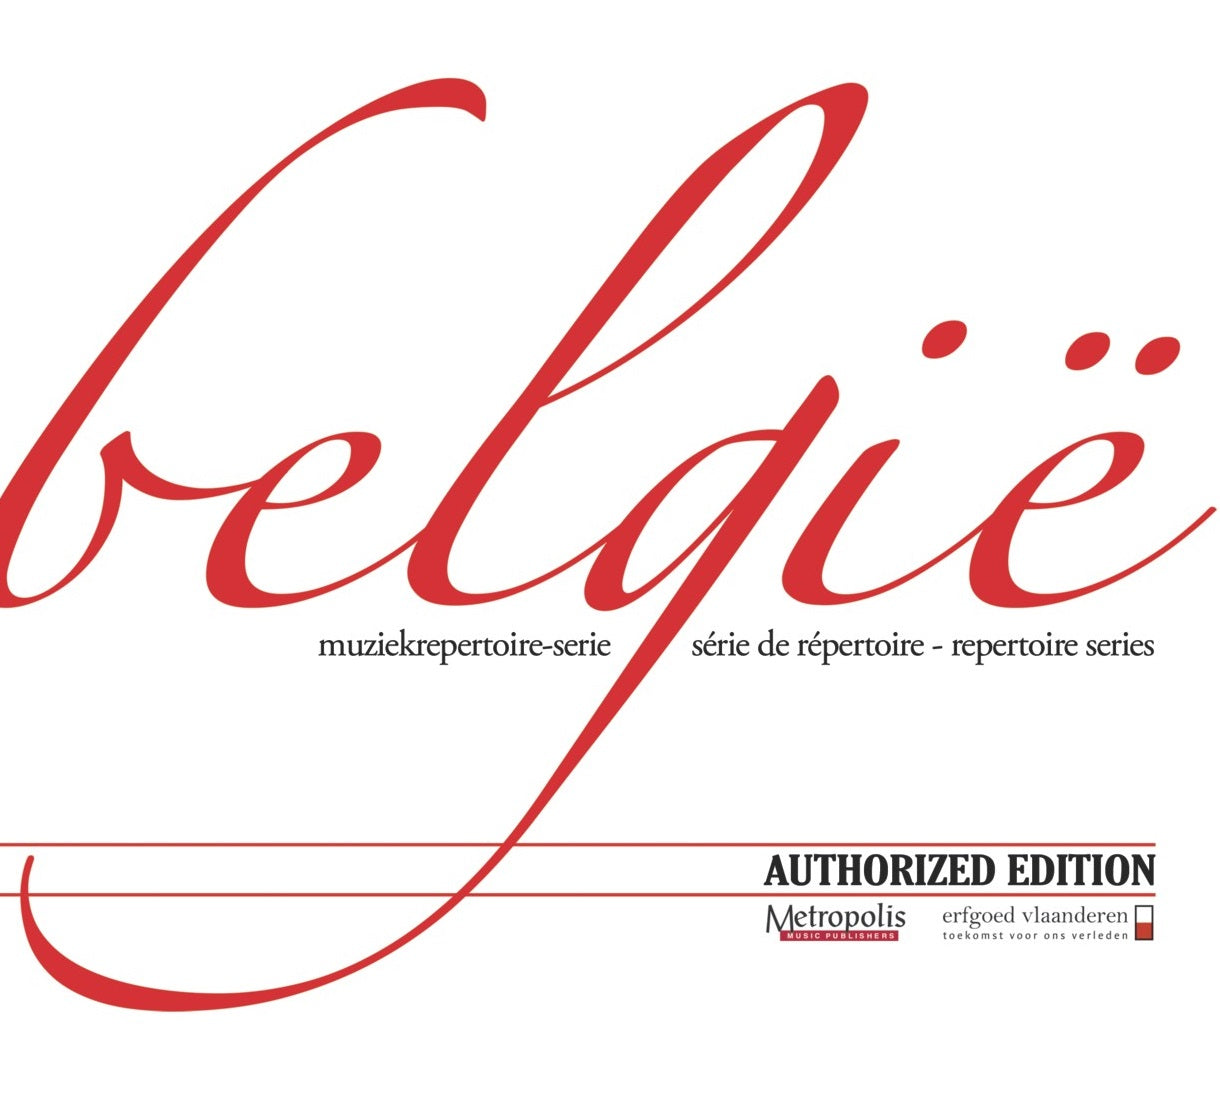 Belgian Repertoire Collection